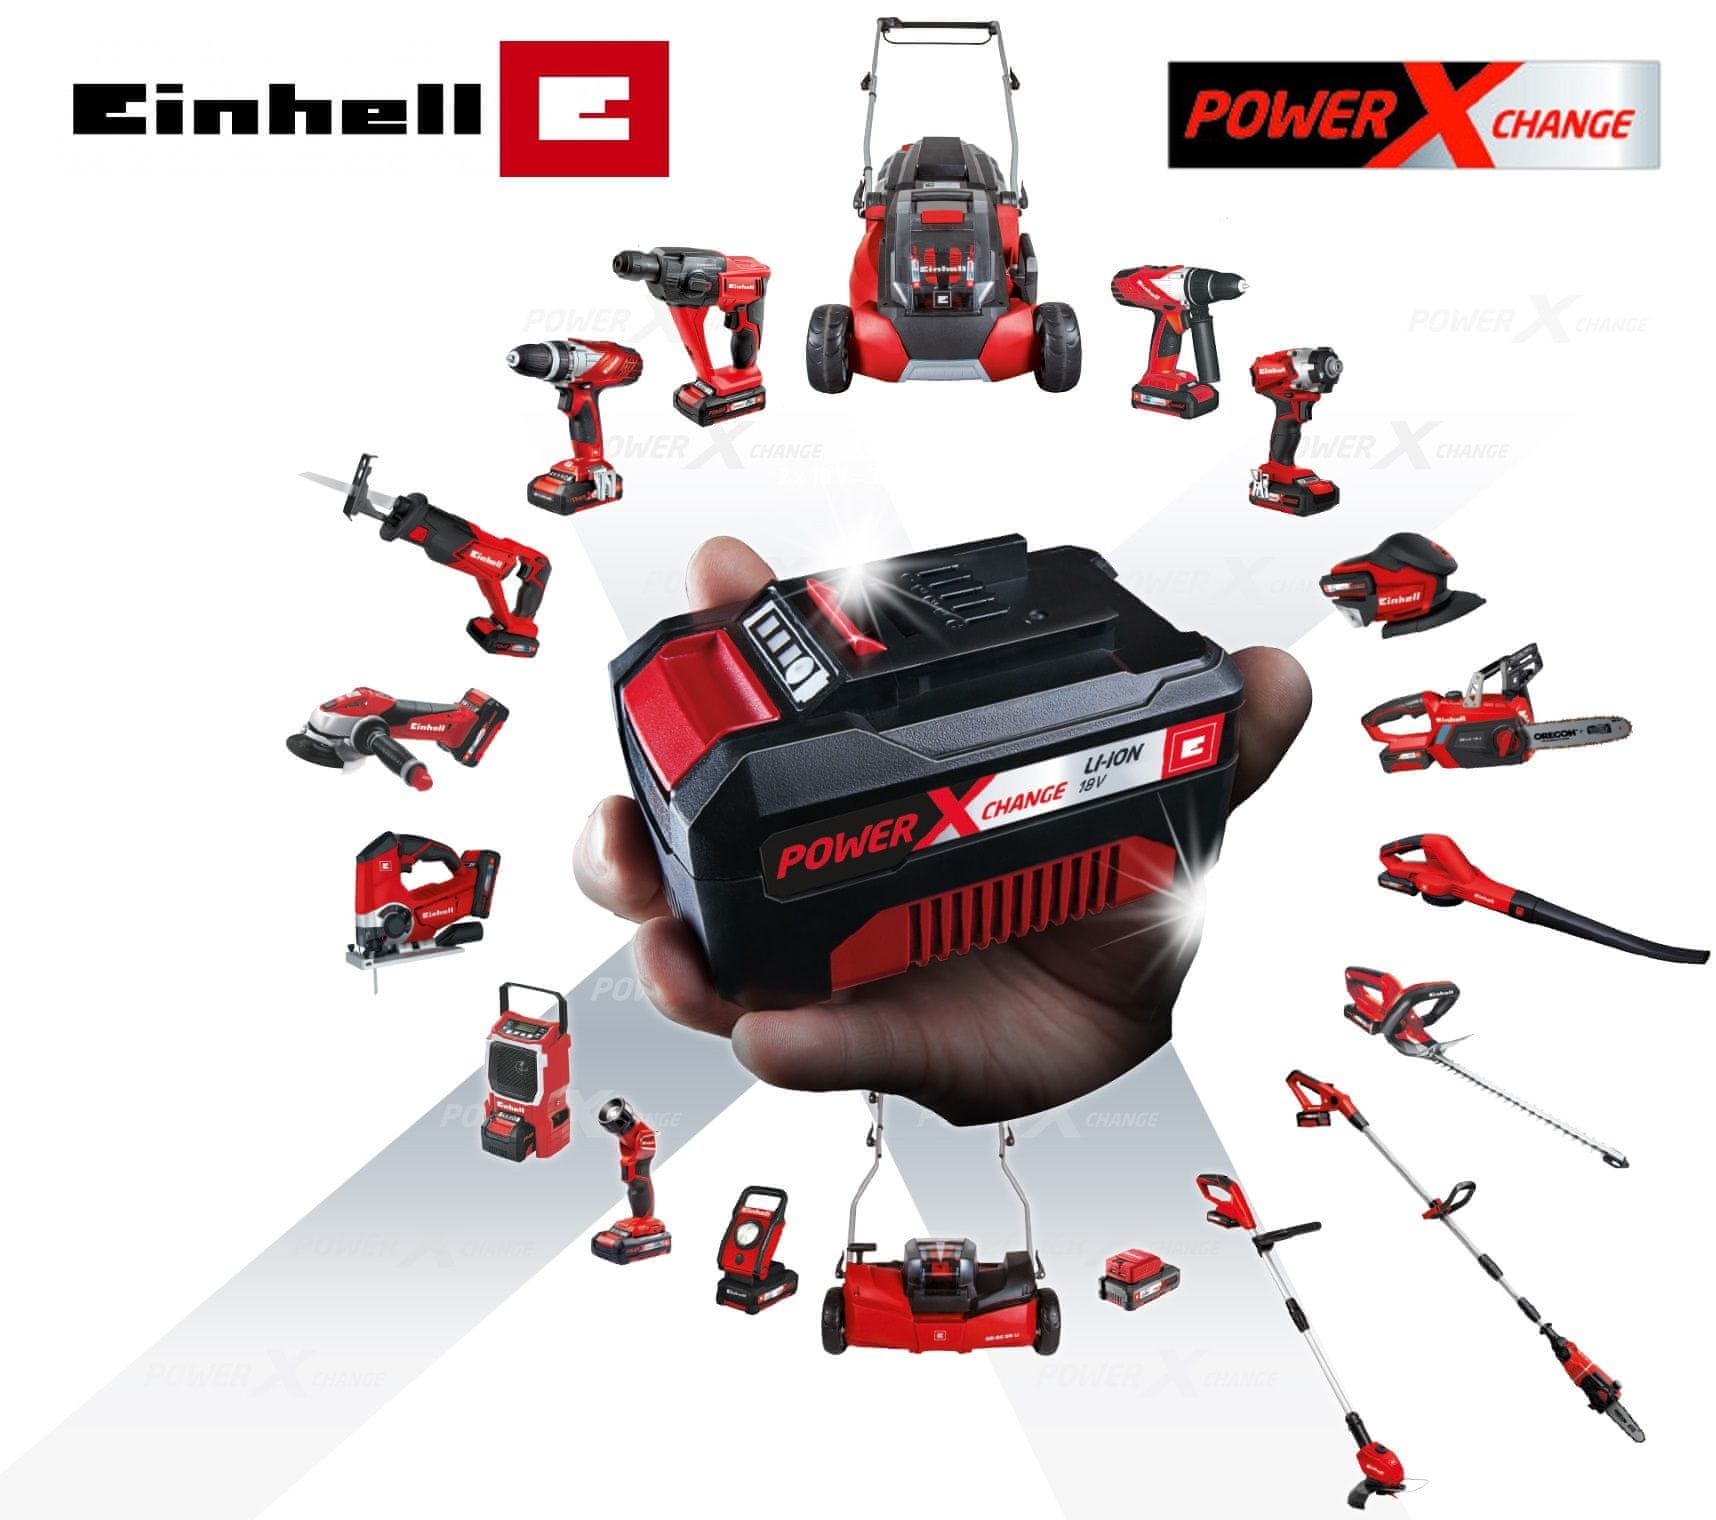 EINHELL Bateria 18v 2.5 Ah + Cargador Rapido Power Xchange Einhell